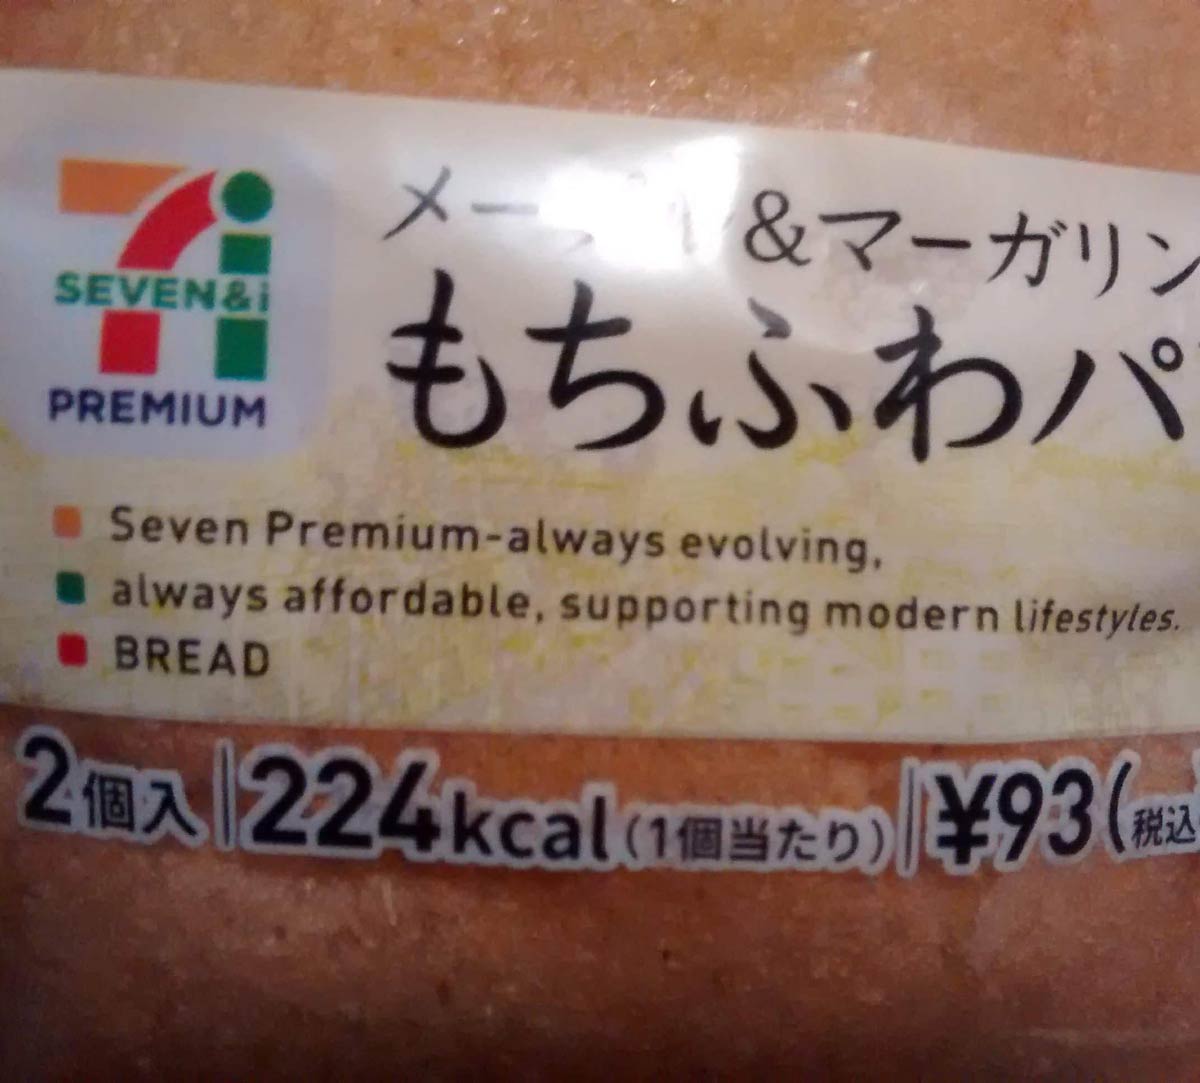 Always evolving bread